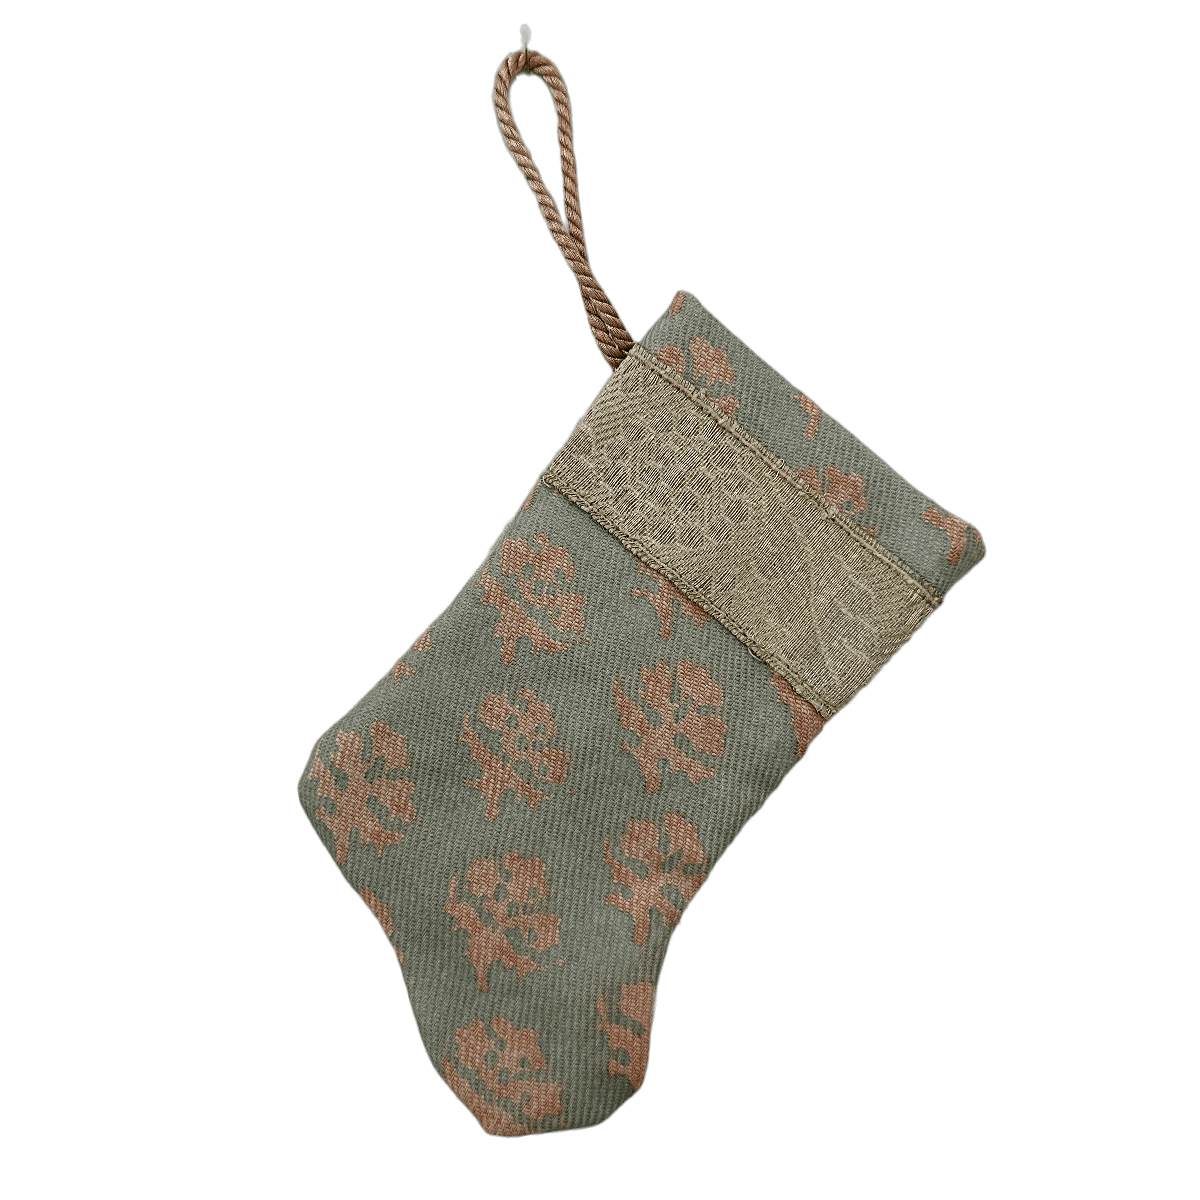 Handmade Mini Stocking Ornament from Antique & Vintage Textiles, Trims | Mint Fortuny Ornament B. Viz Design F 